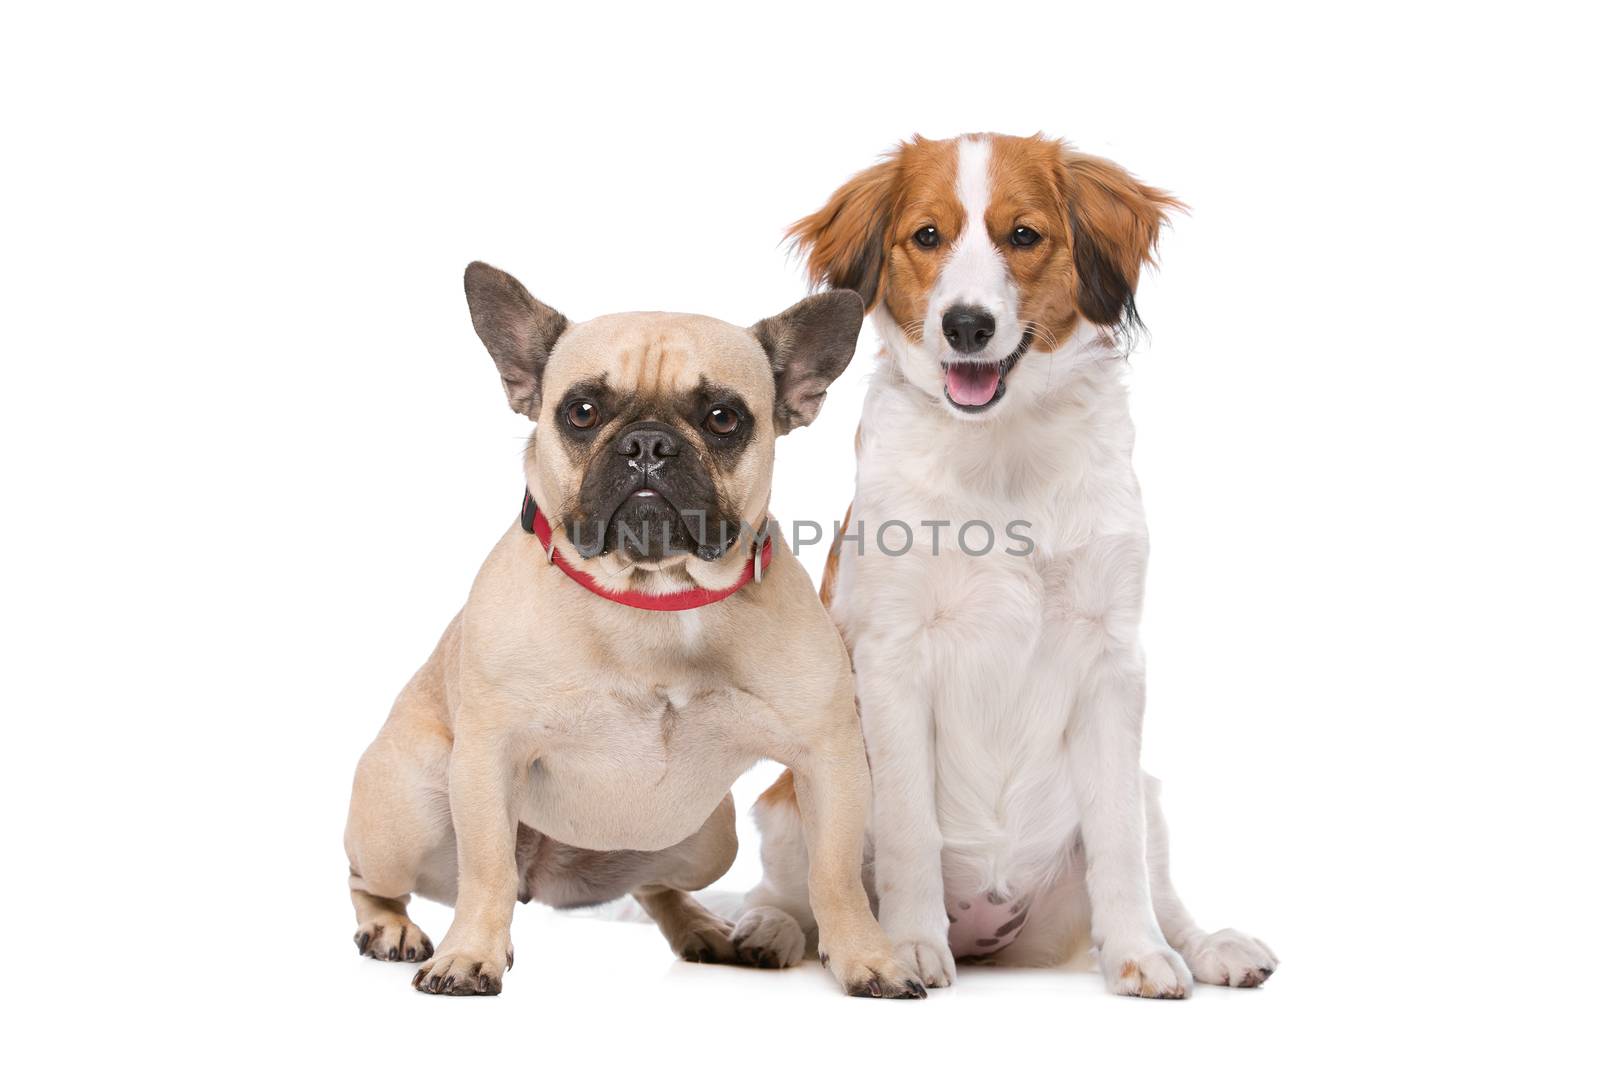 French Bulldog and a Kooiker Dog by eriklam